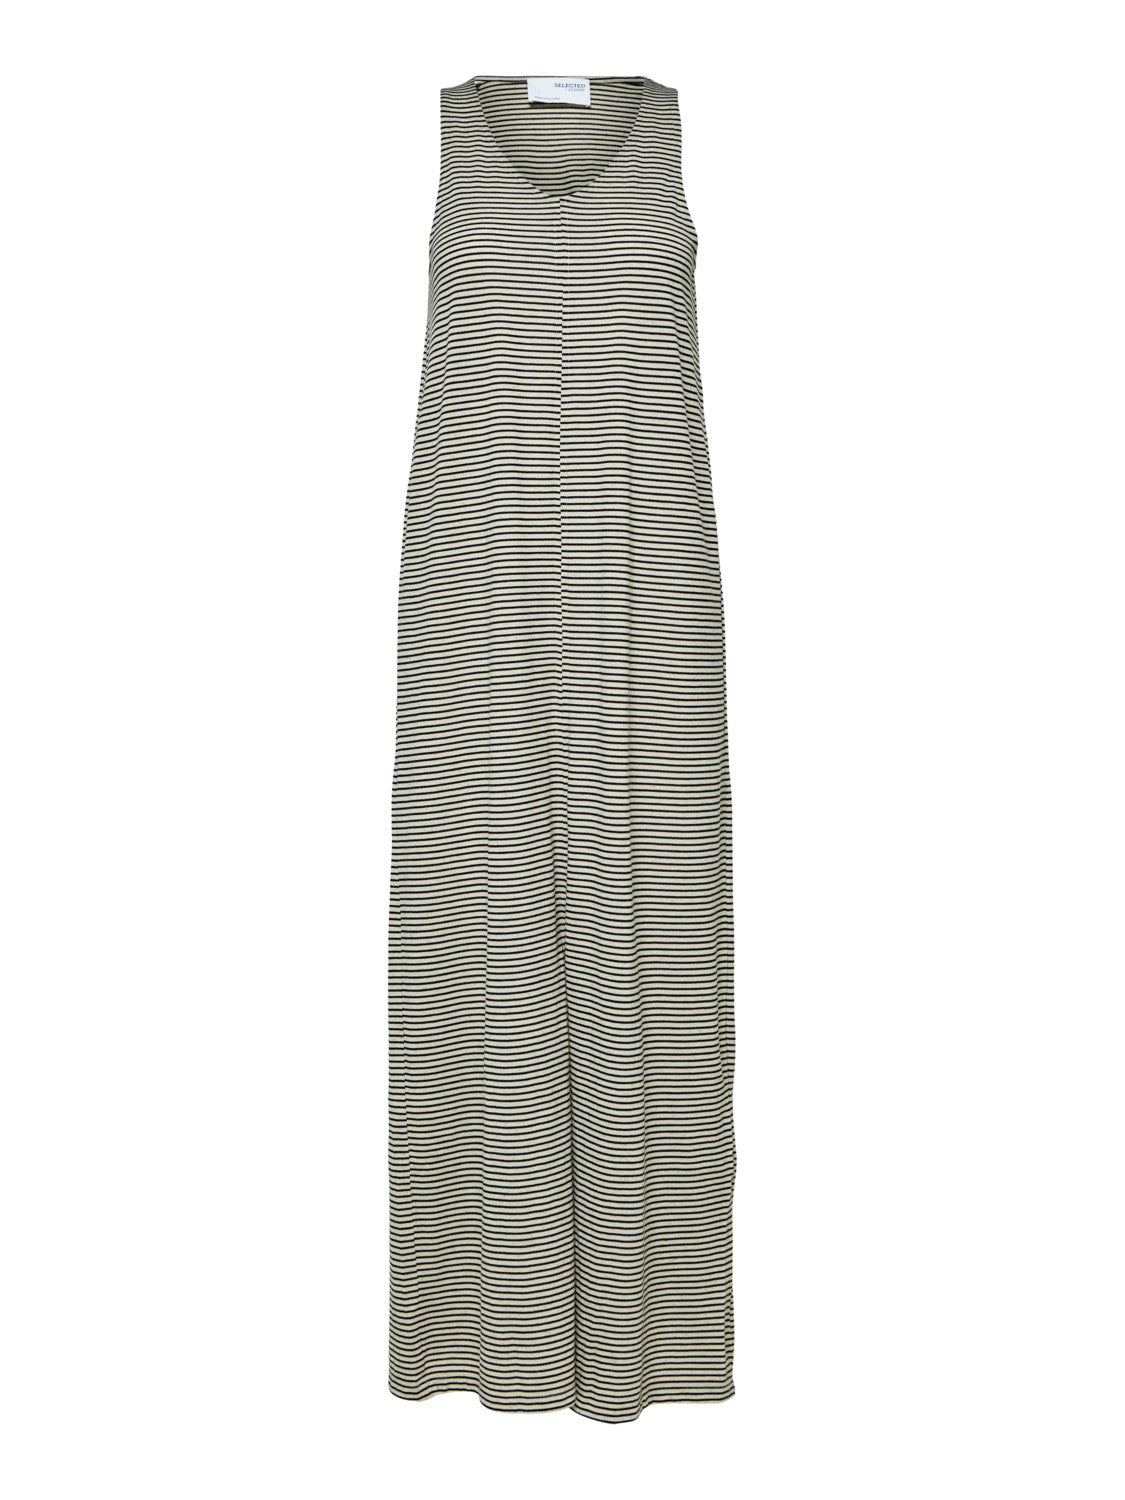 Ankle Slit Dress - Sandshell / Black Stripe